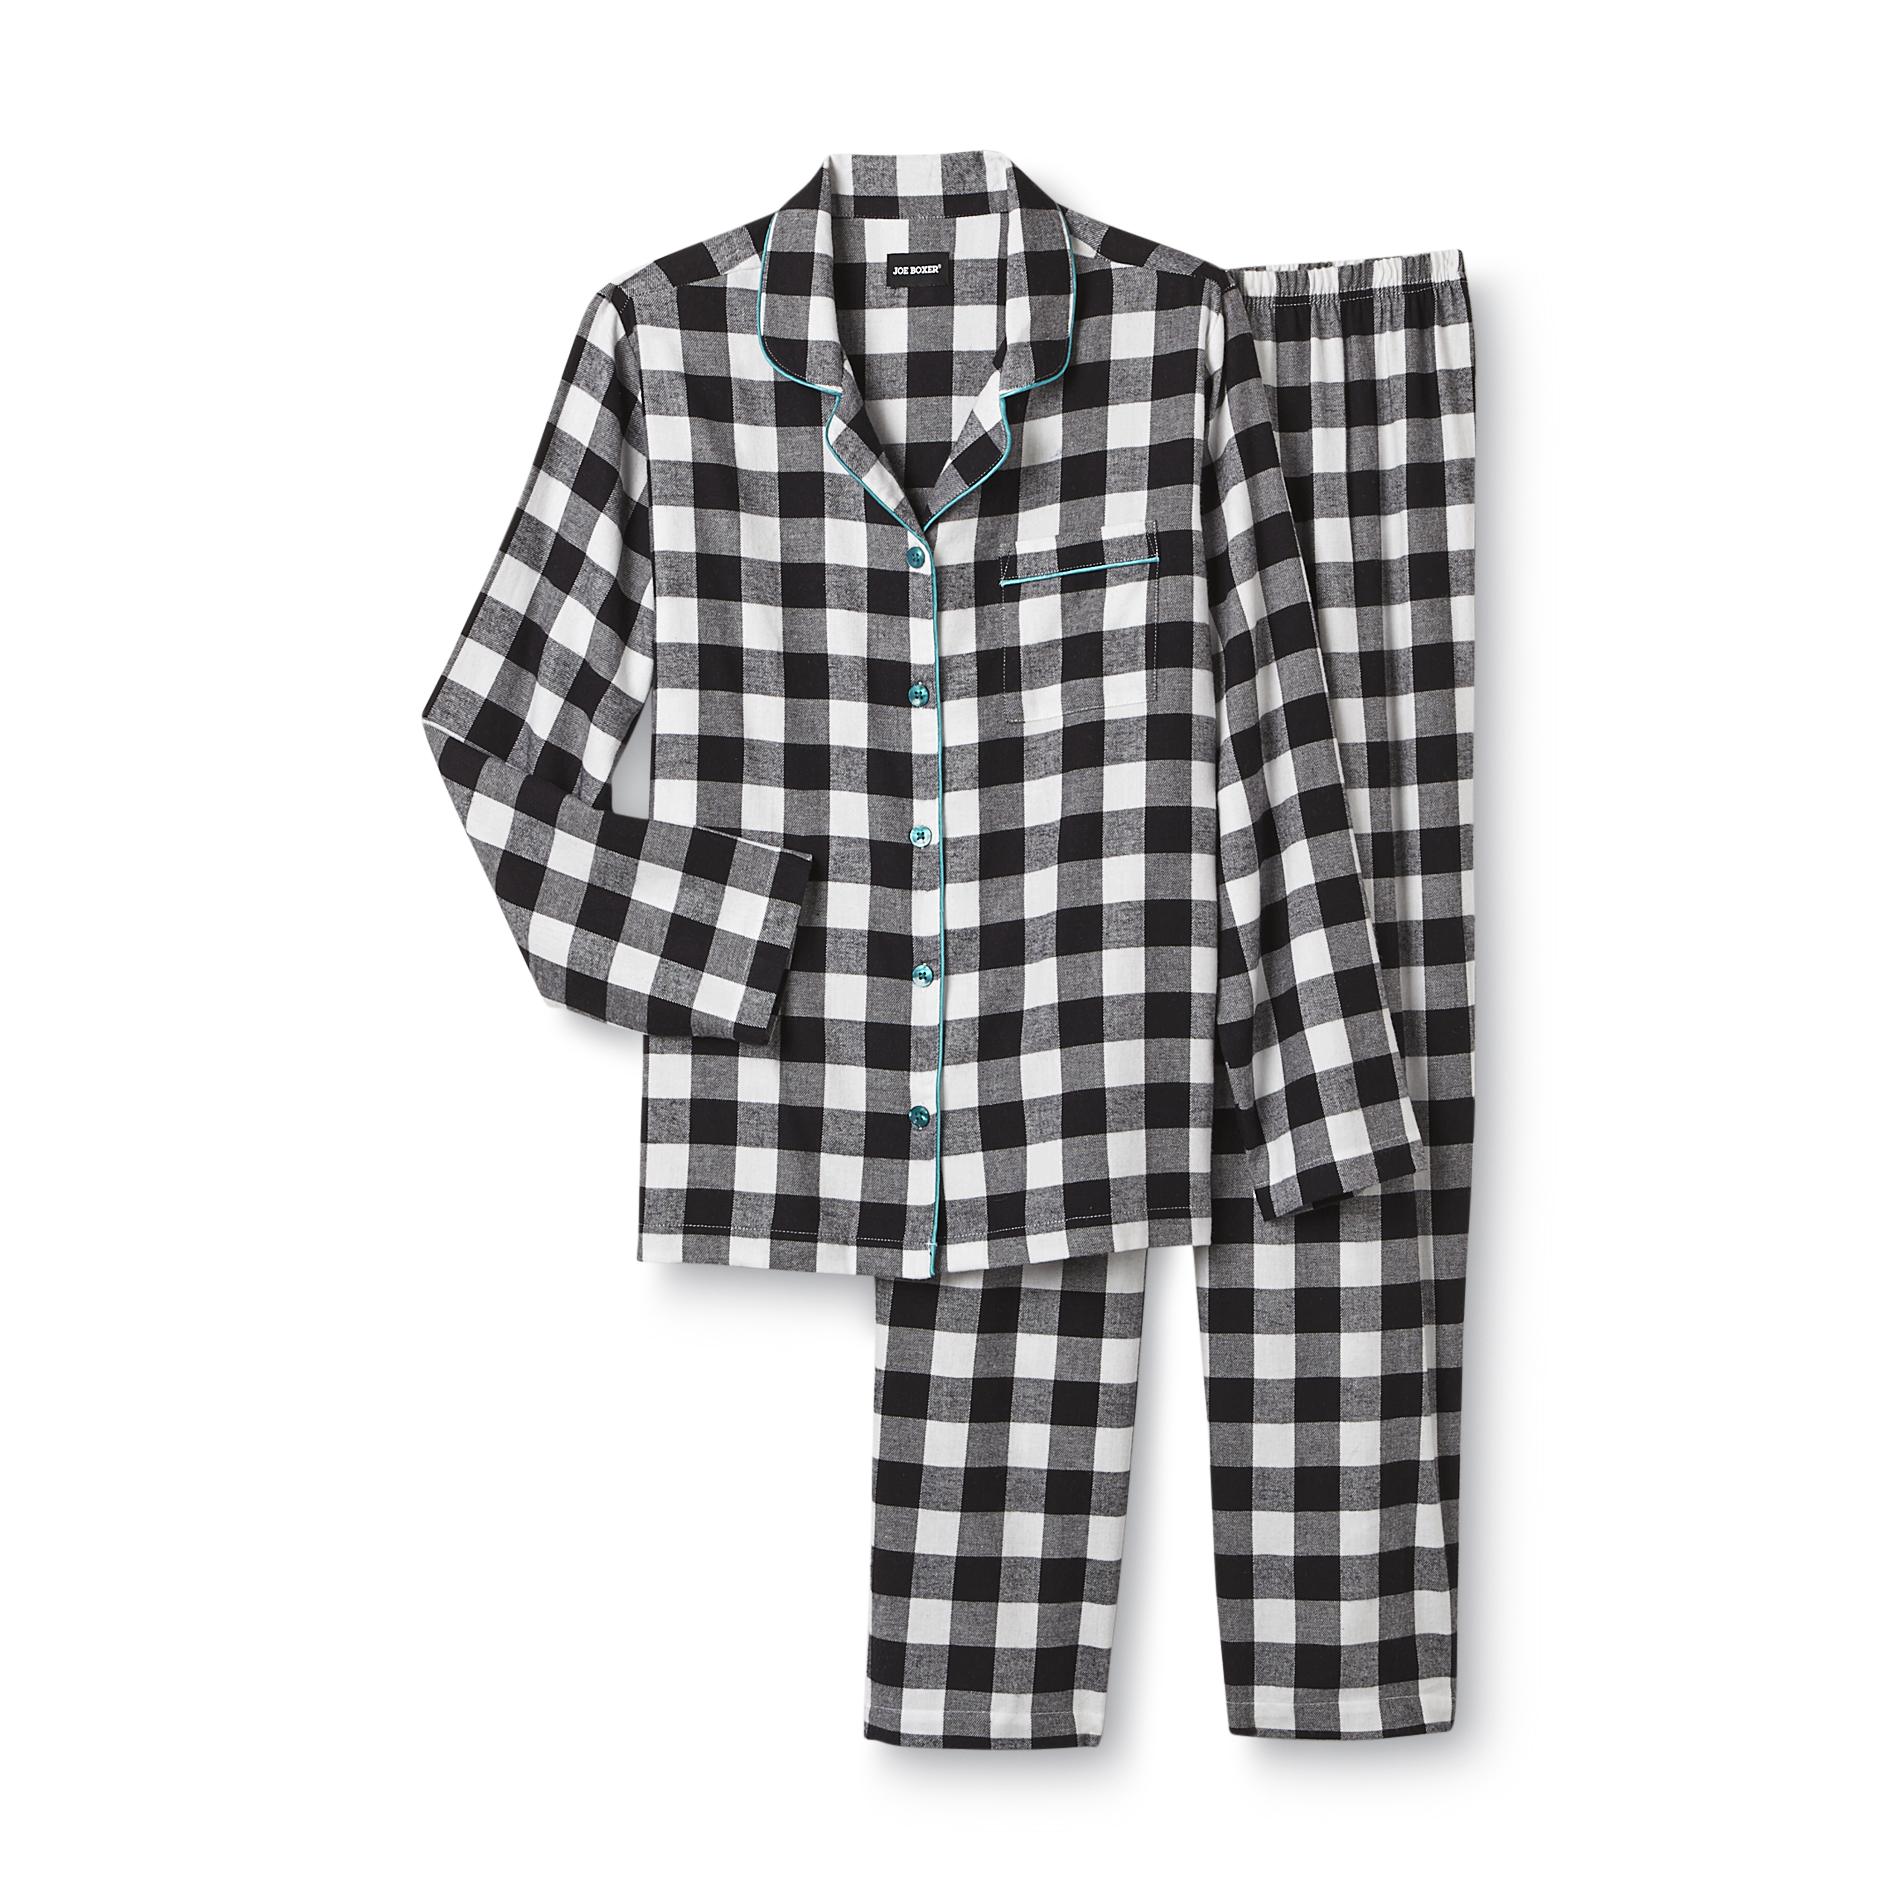 Joe Boxer Women's 2-Piece Flannel Pajama Set - Checkered